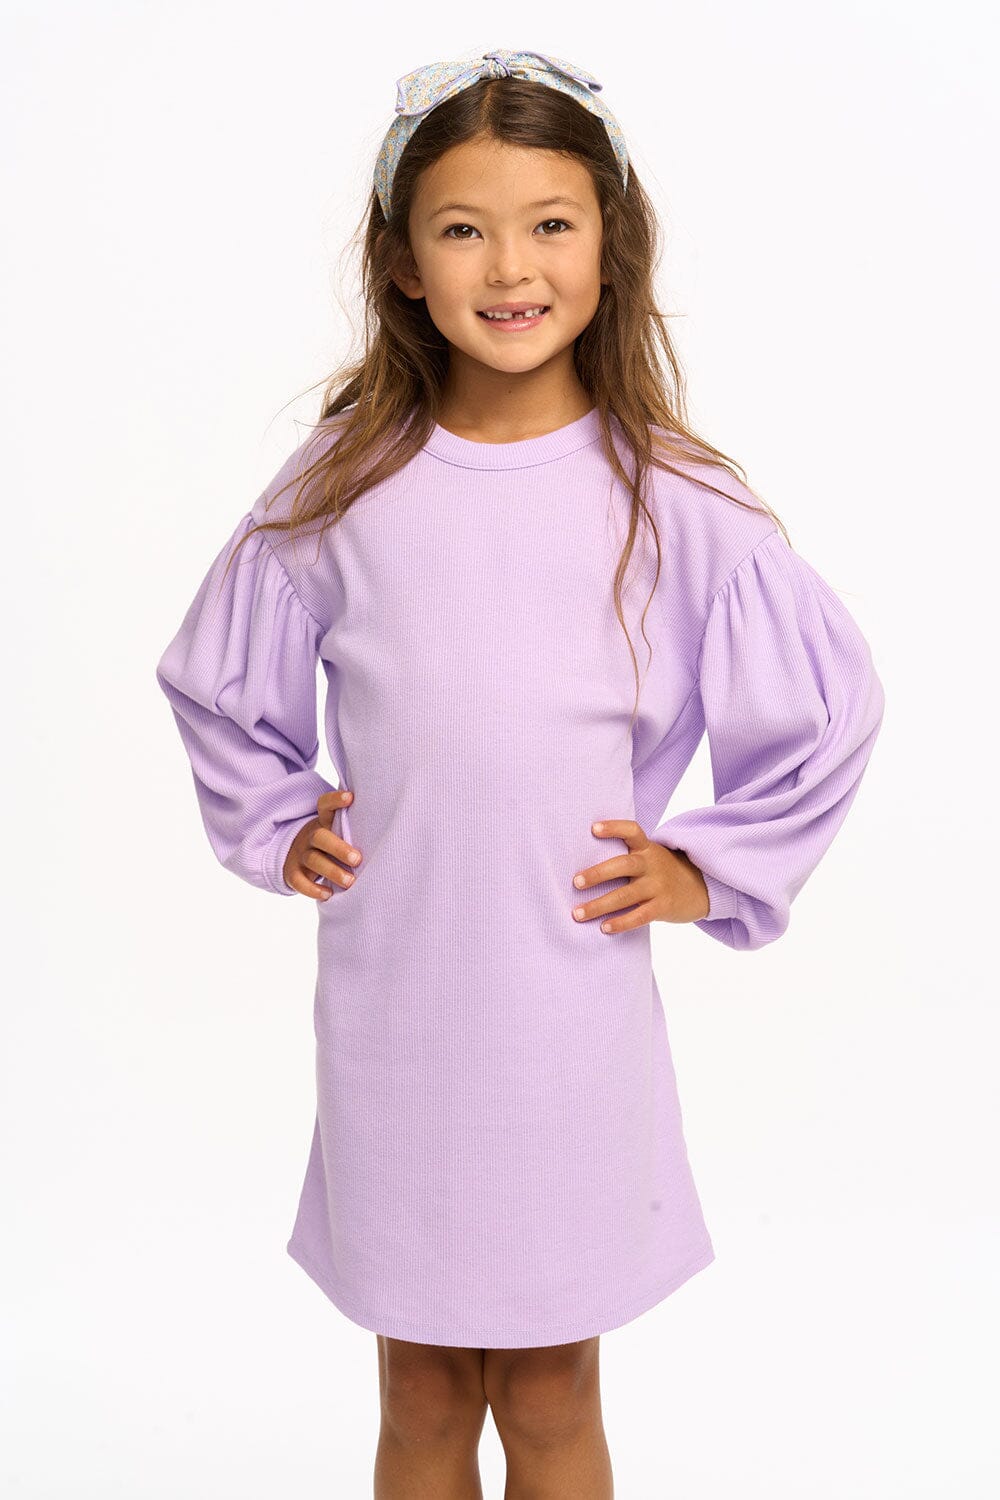 Lavender Rib Long Sleeve Dress 160 GIRLS APPAREL TWEEN 7-16 Chaser 